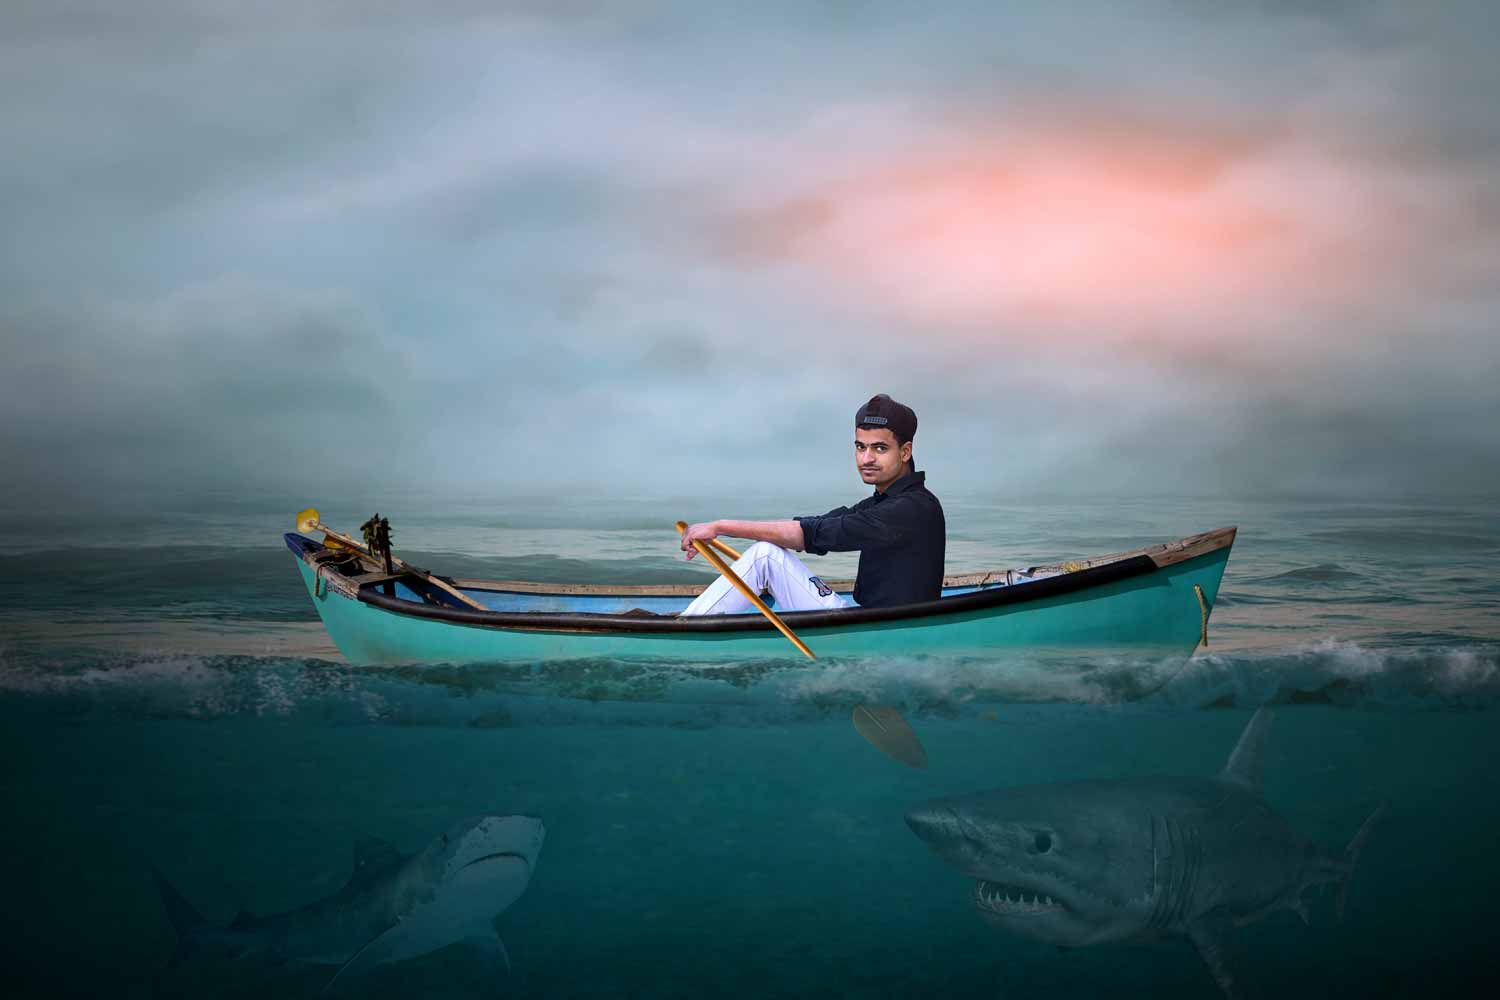 Boat Riding Photo Manipulation